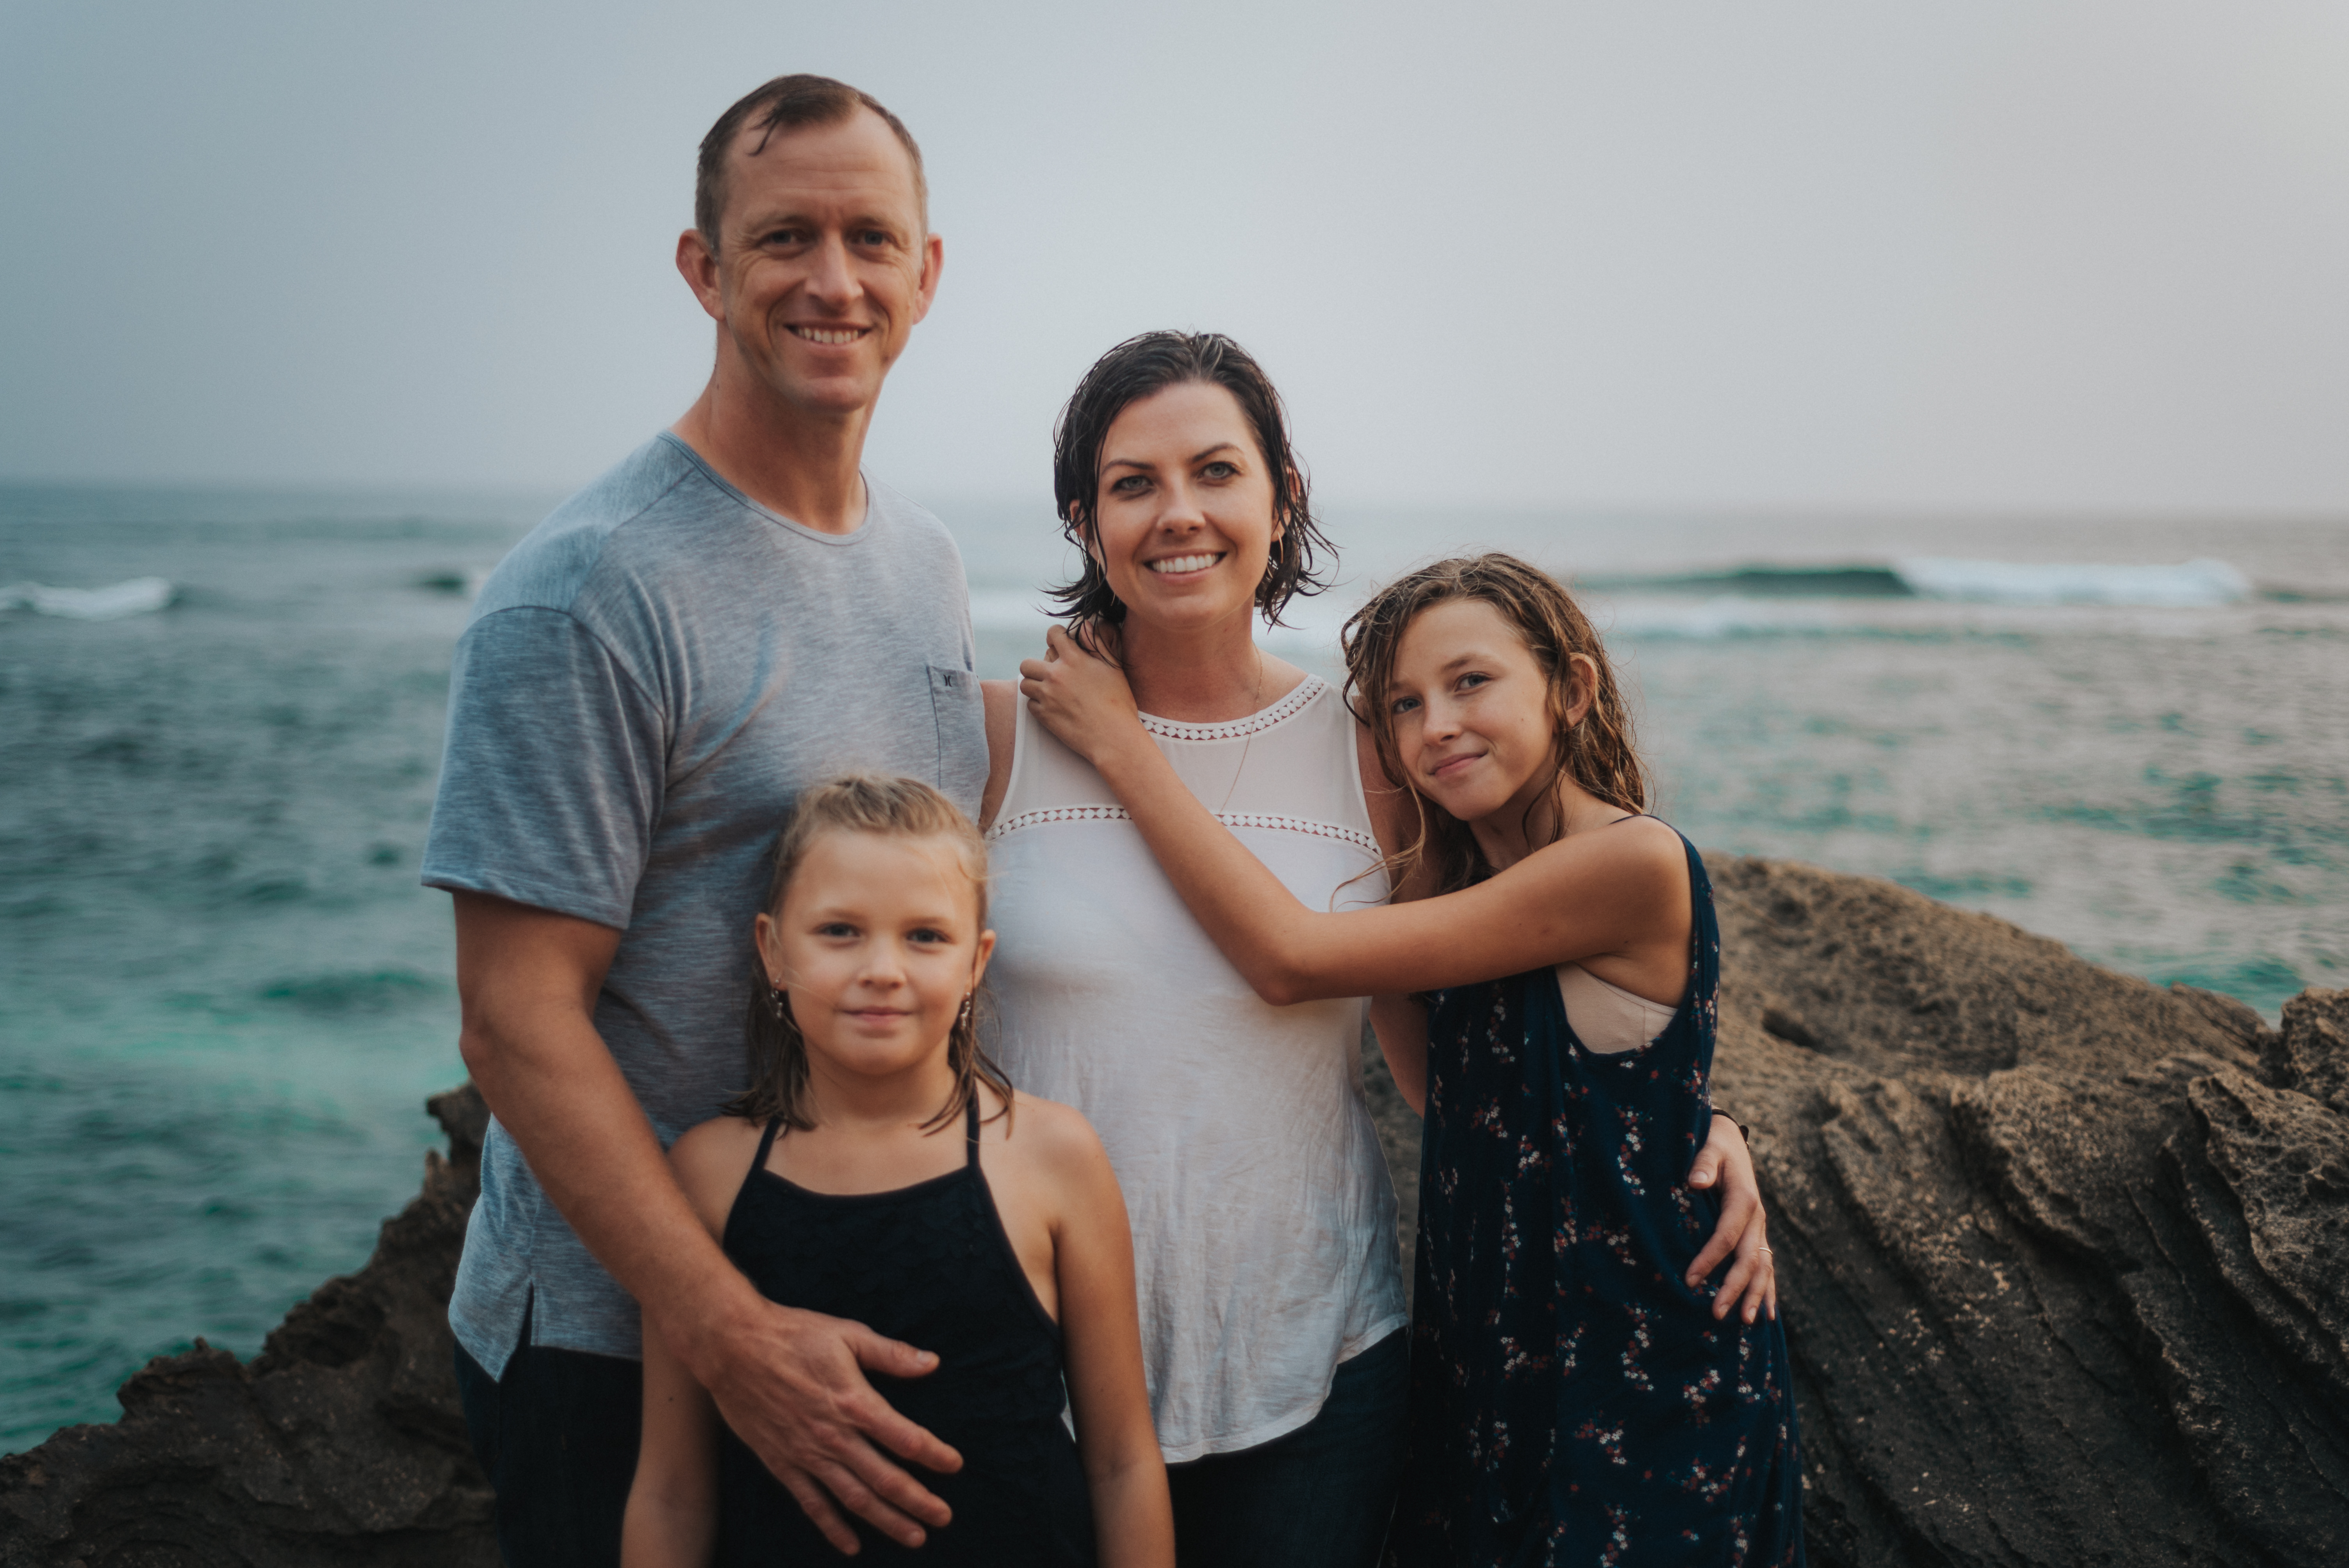 Lindsay + Levi + Family photos at Shipwreck Beach